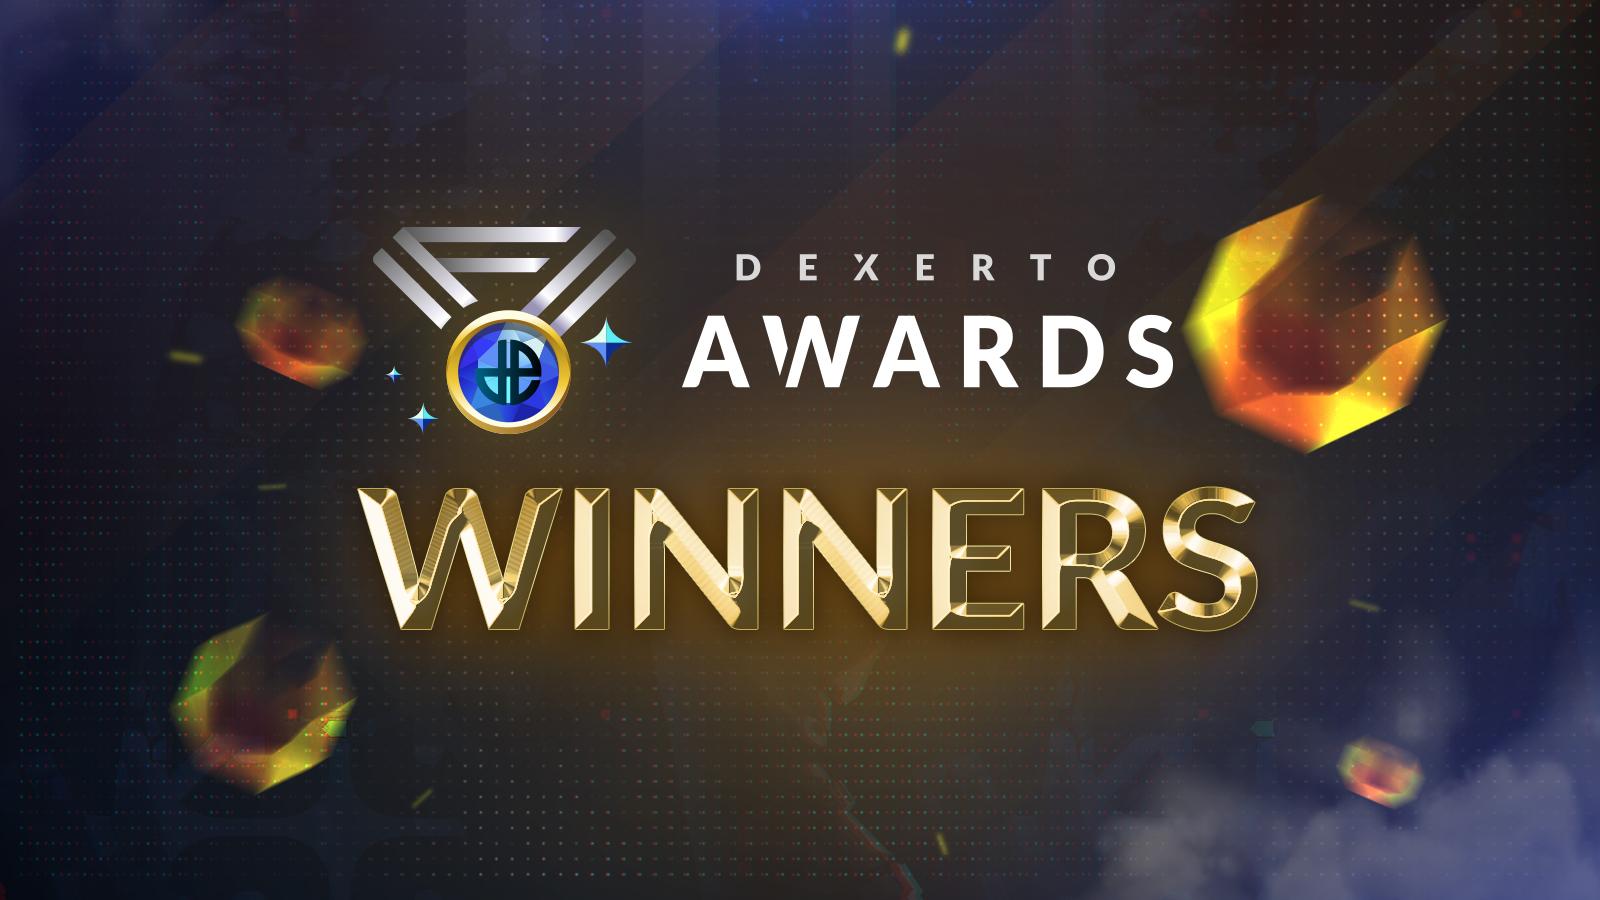 Dexerto Awards 2020 winners results